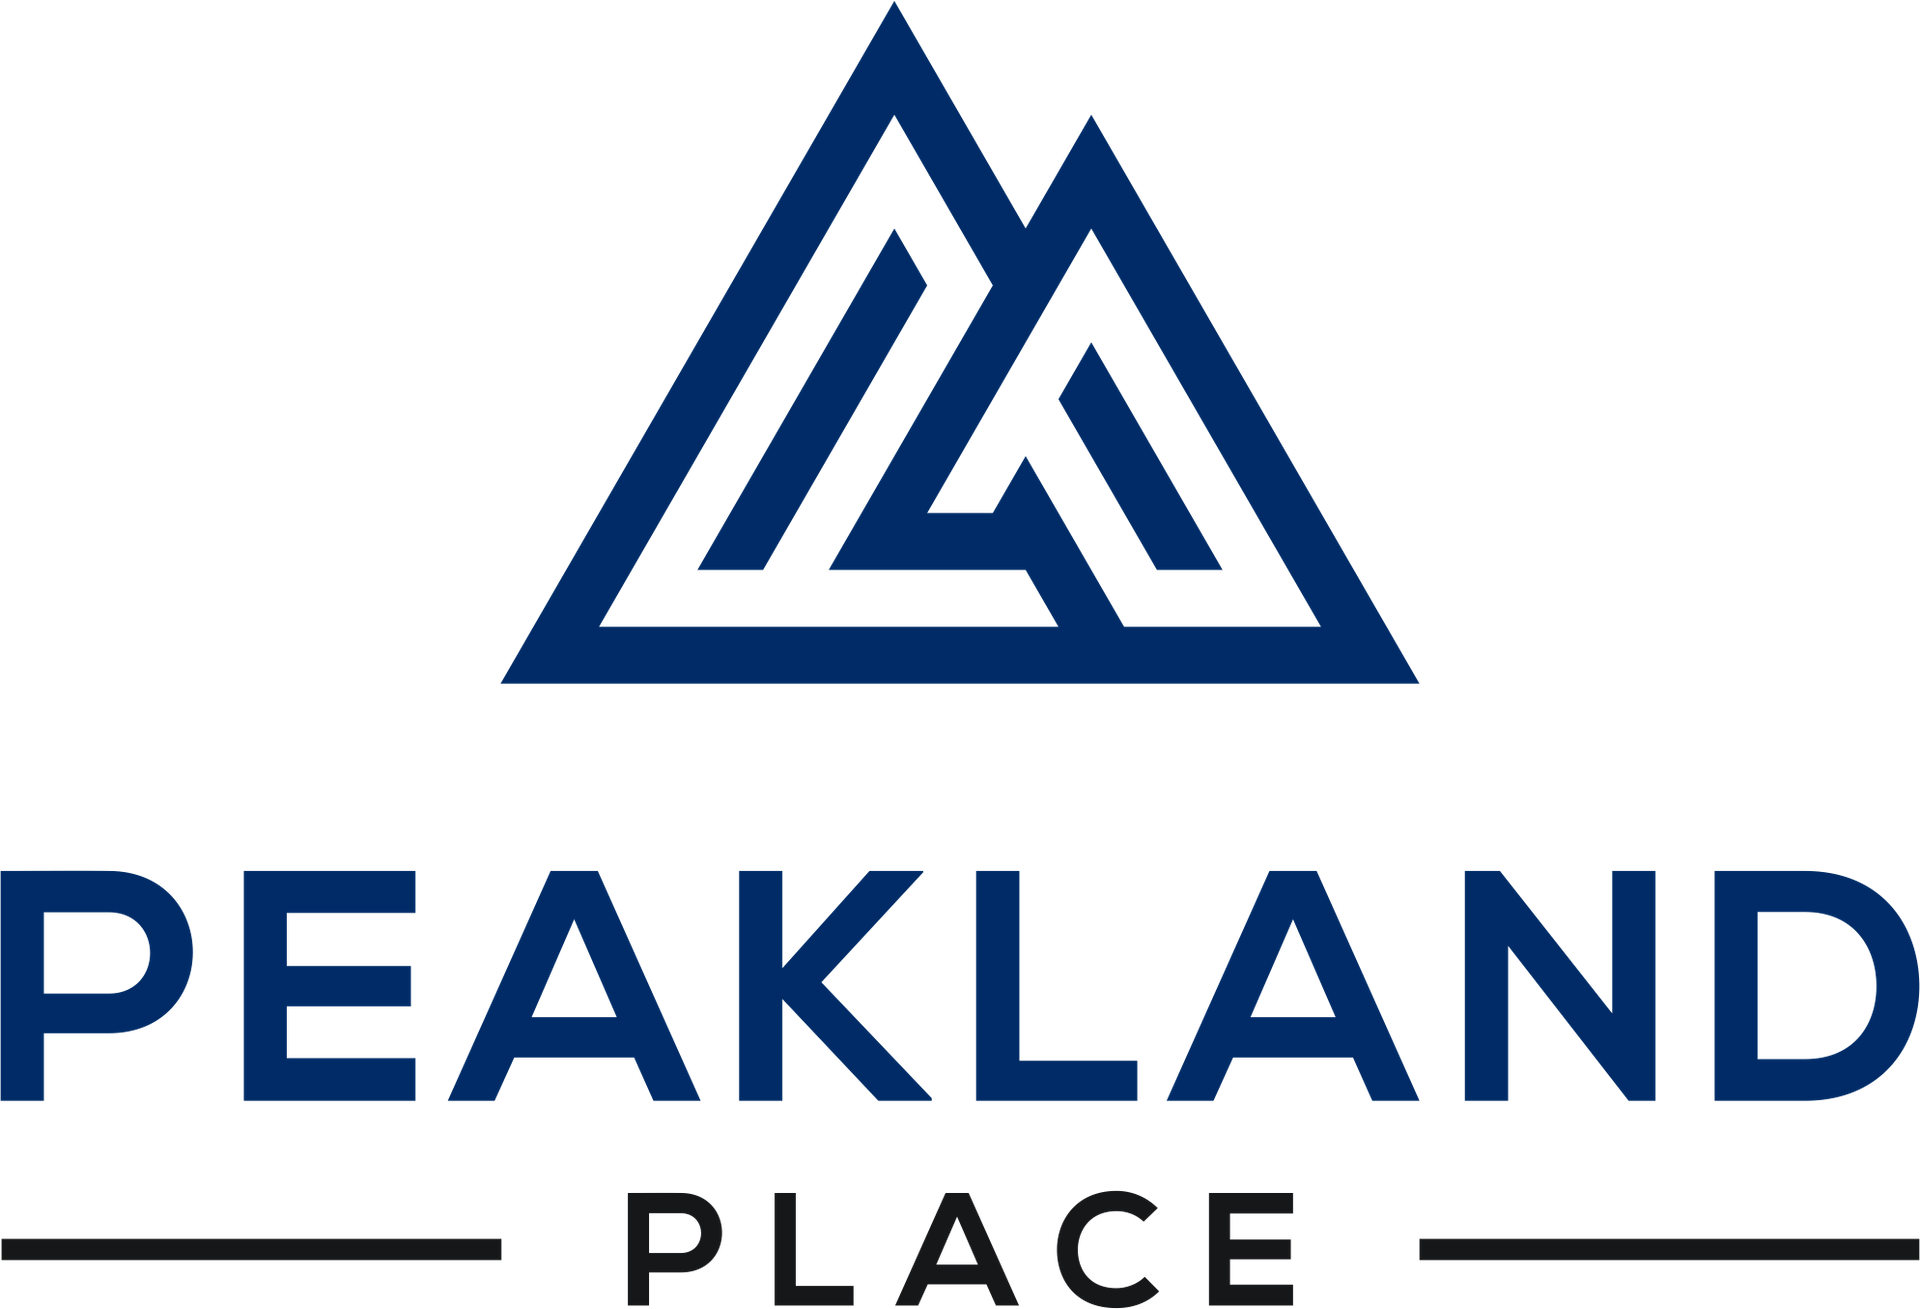 Peakland Place